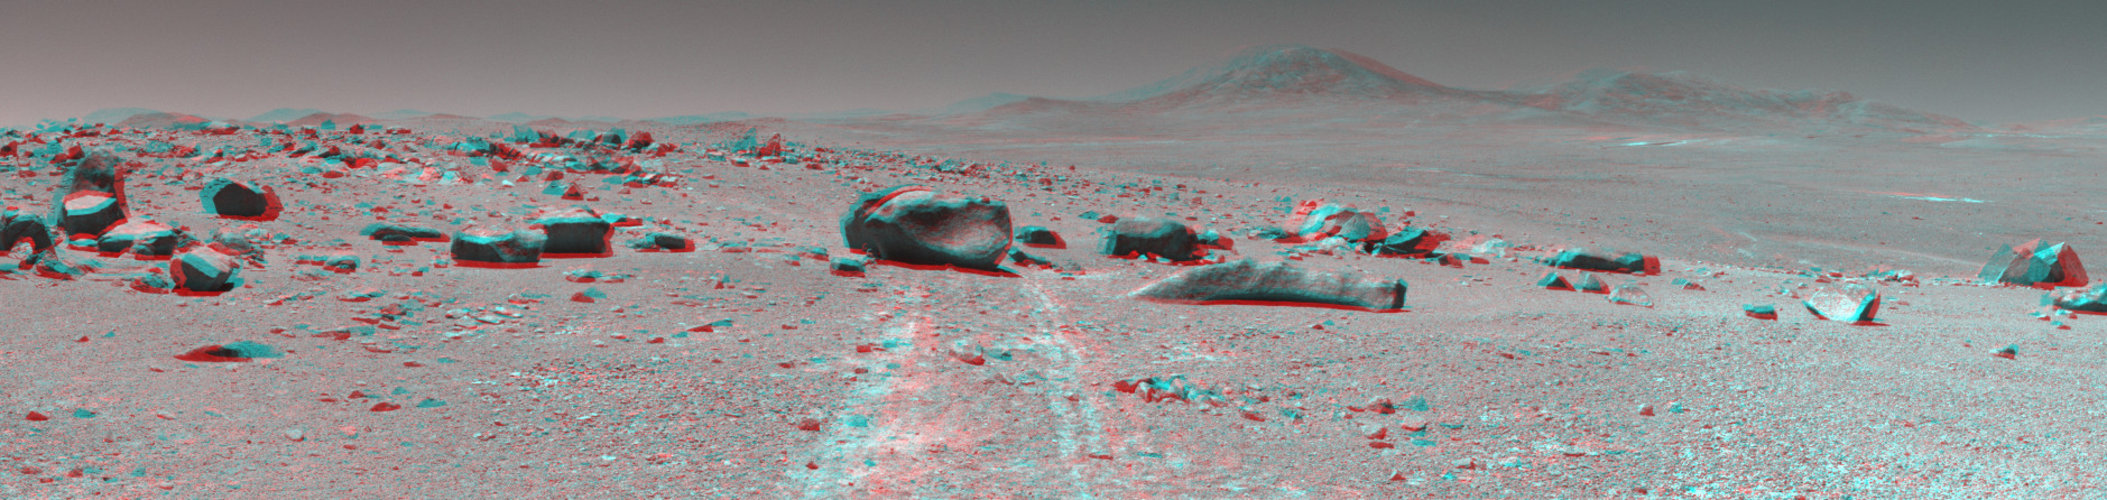 ExoFiT rover looks back